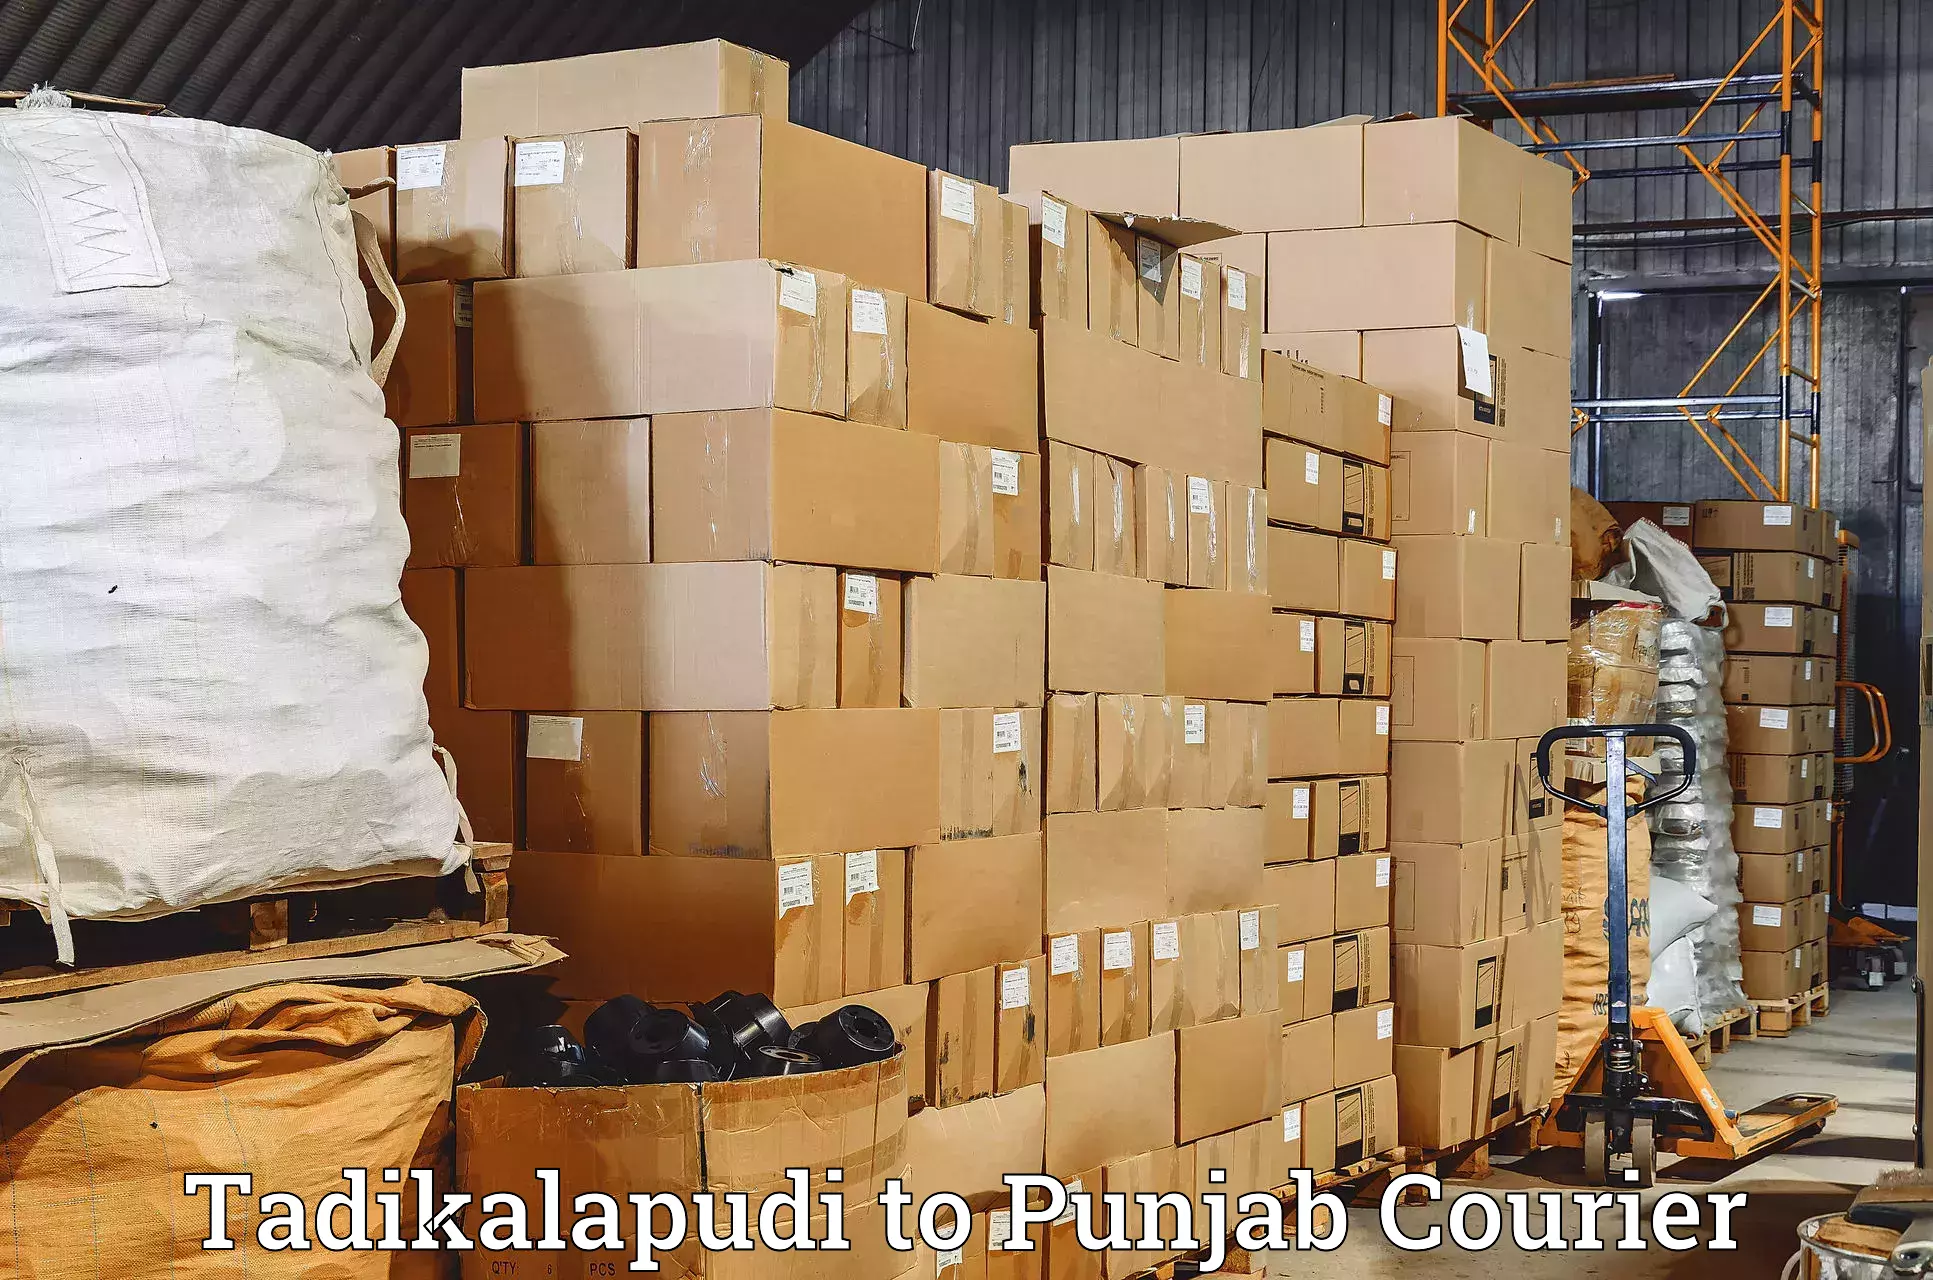 State-of-the-art courier technology Tadikalapudi to Talwara